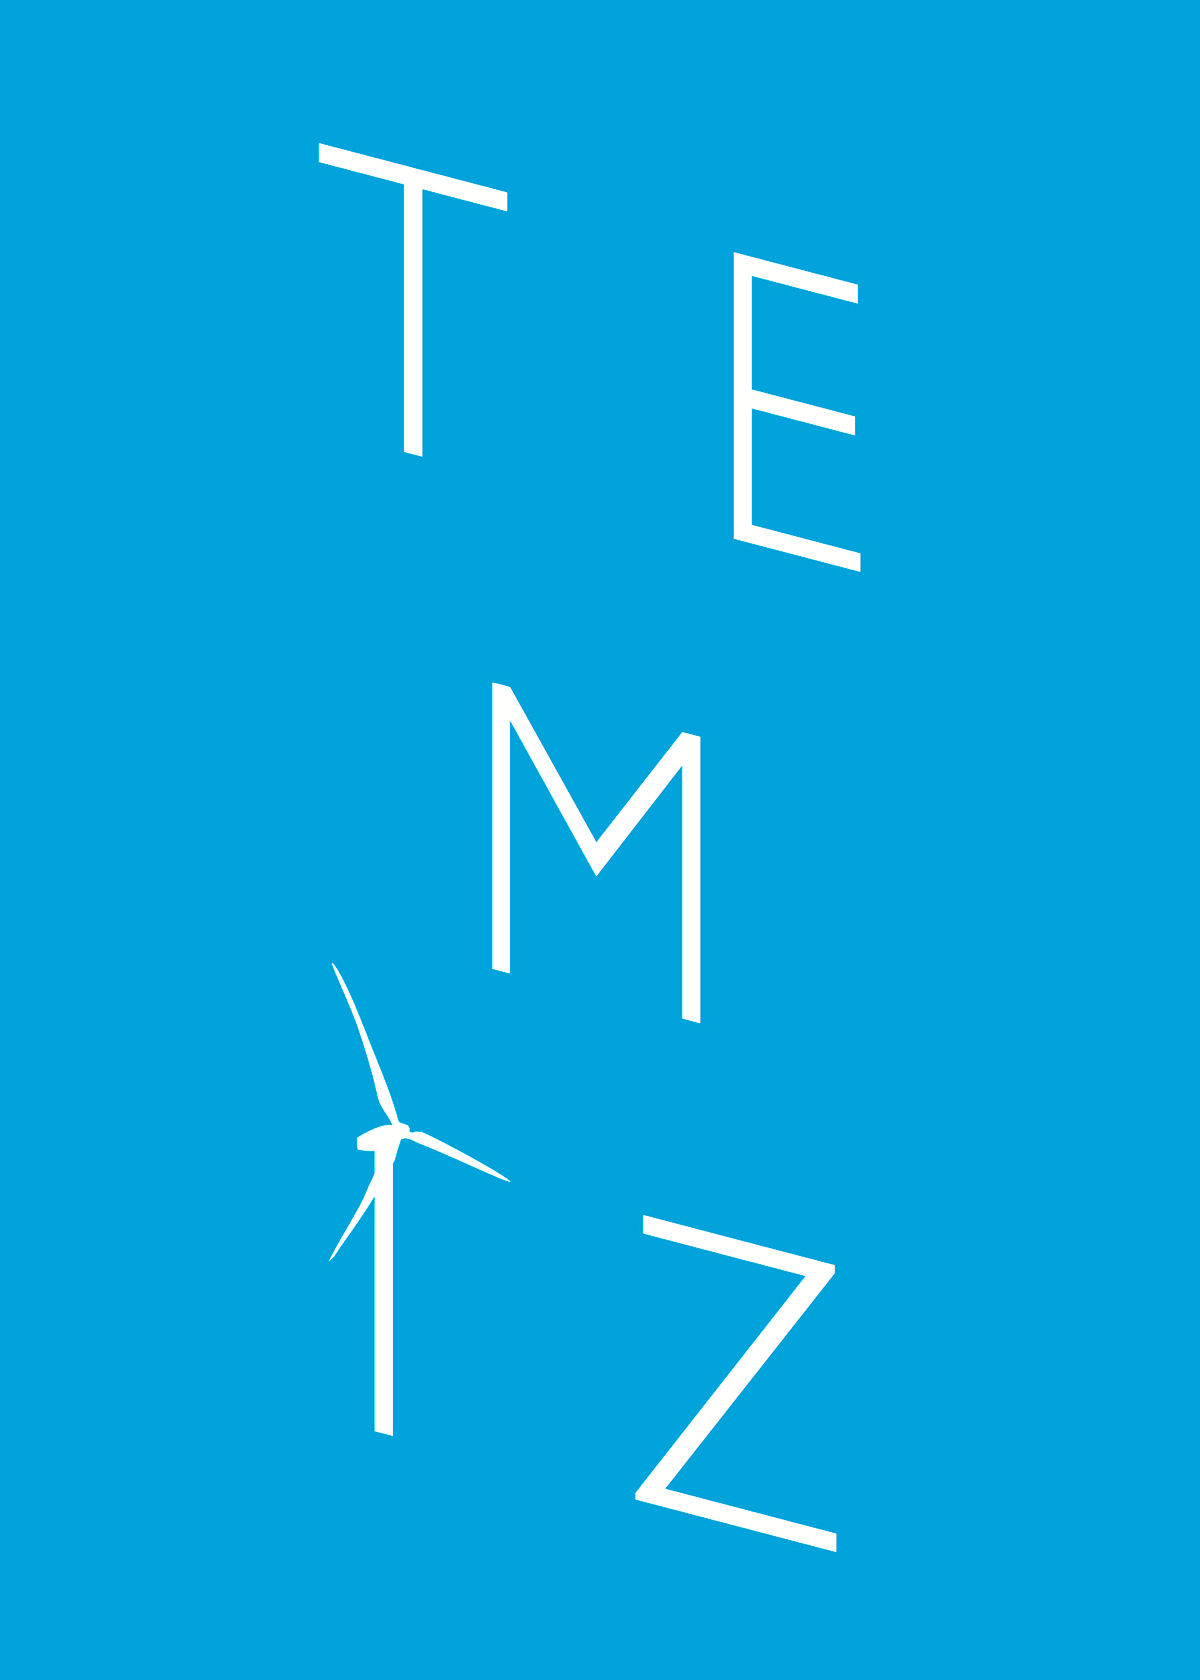 temiz clean energy clean energy temiz ecerji nuclear poster graphic ruzgar wind Turbine